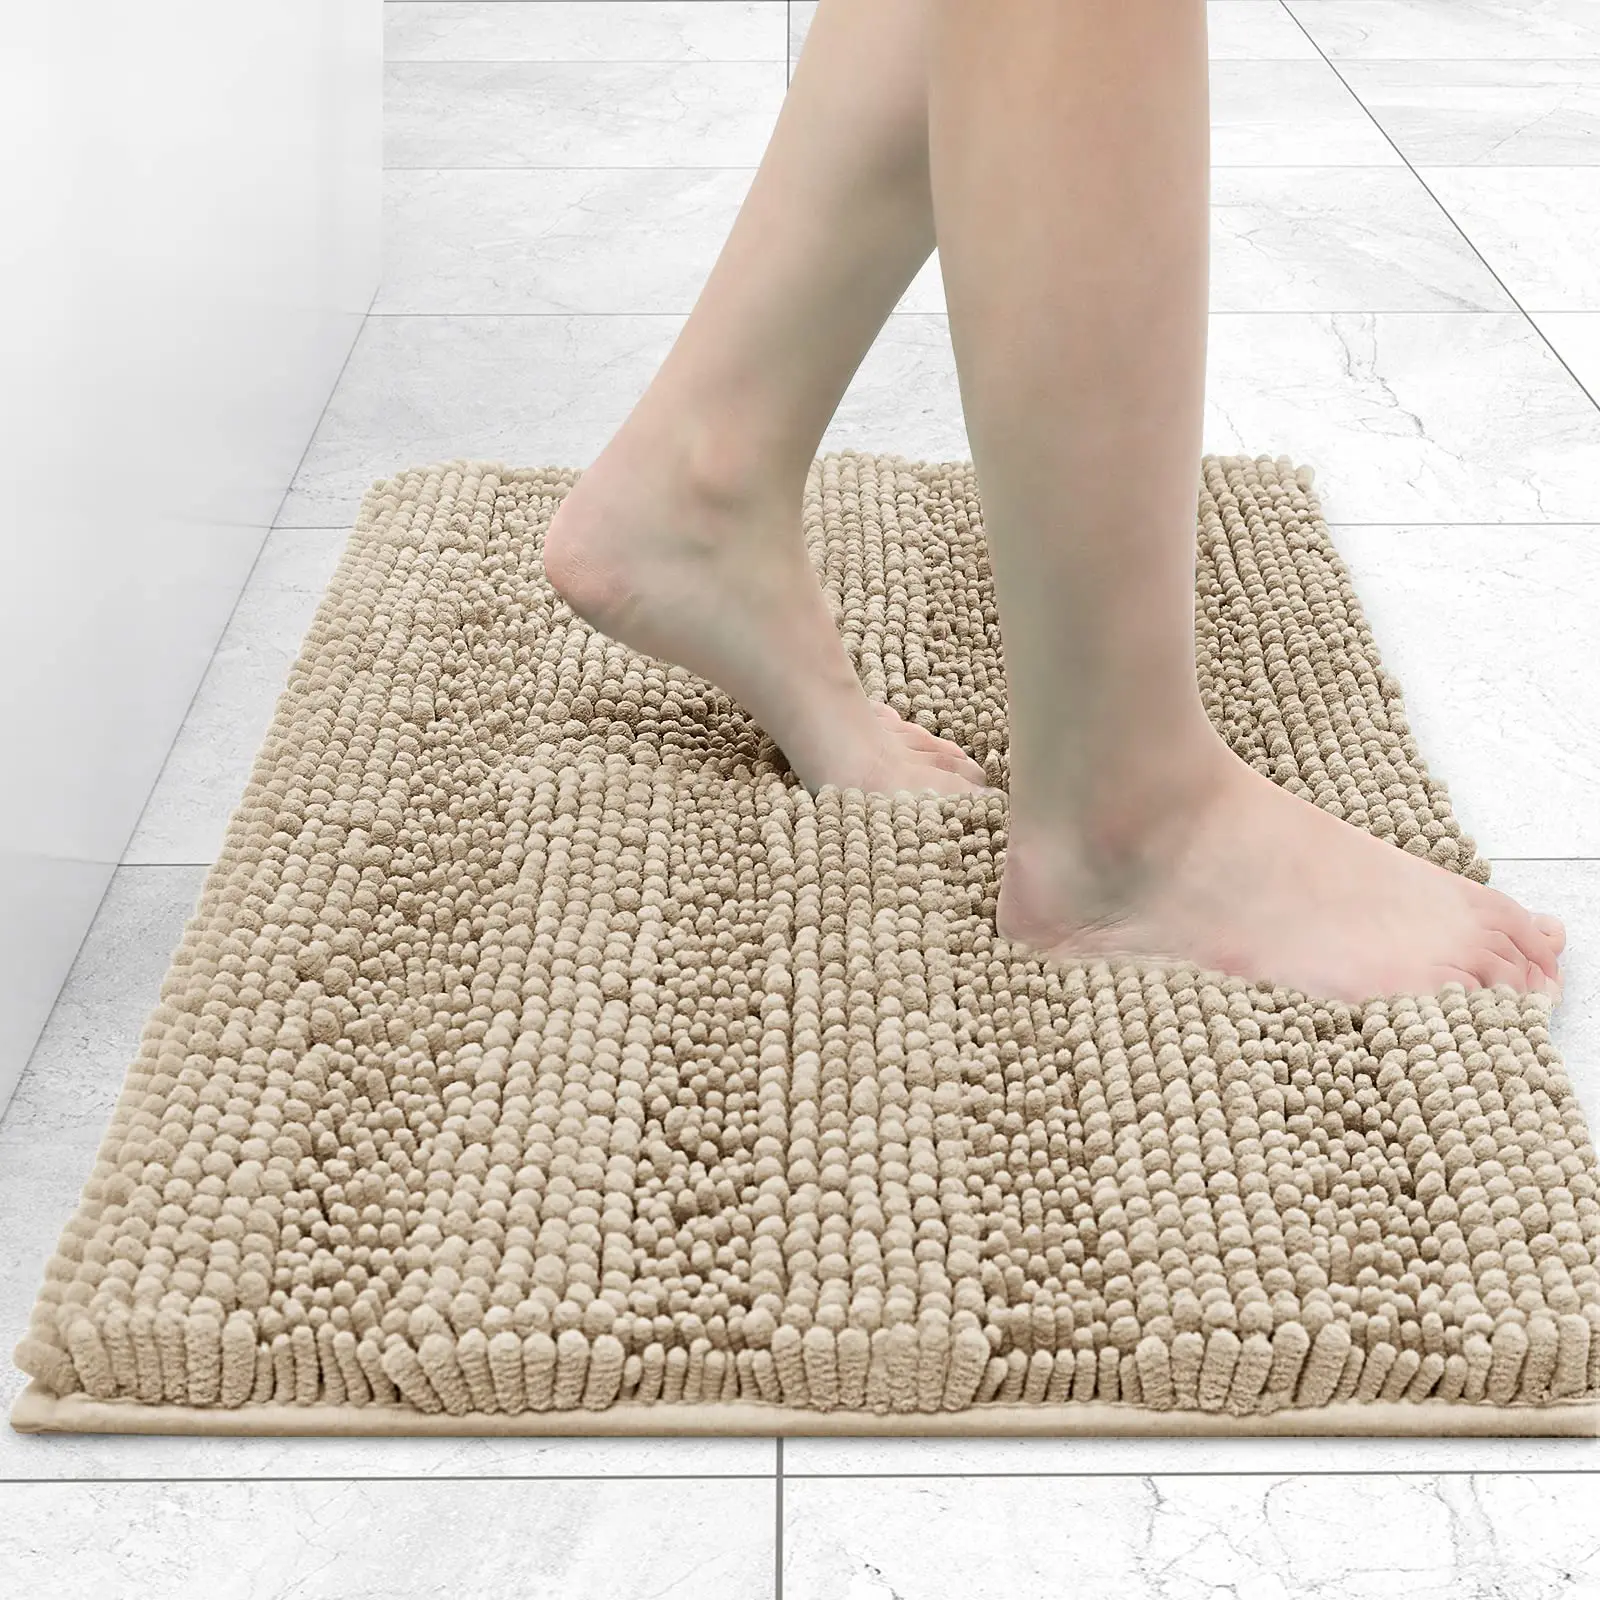 https://ae01.alicdn.com/kf/S757b87d1d3964464b6005fb44b020c8f5/Homaxy-Chenille-Striped-Bath-Mat-Absorbent-Quick-Dry-Floor-Decoration-Shaggy-Shower-Pad-Soft-Plush-Carpet.jpg